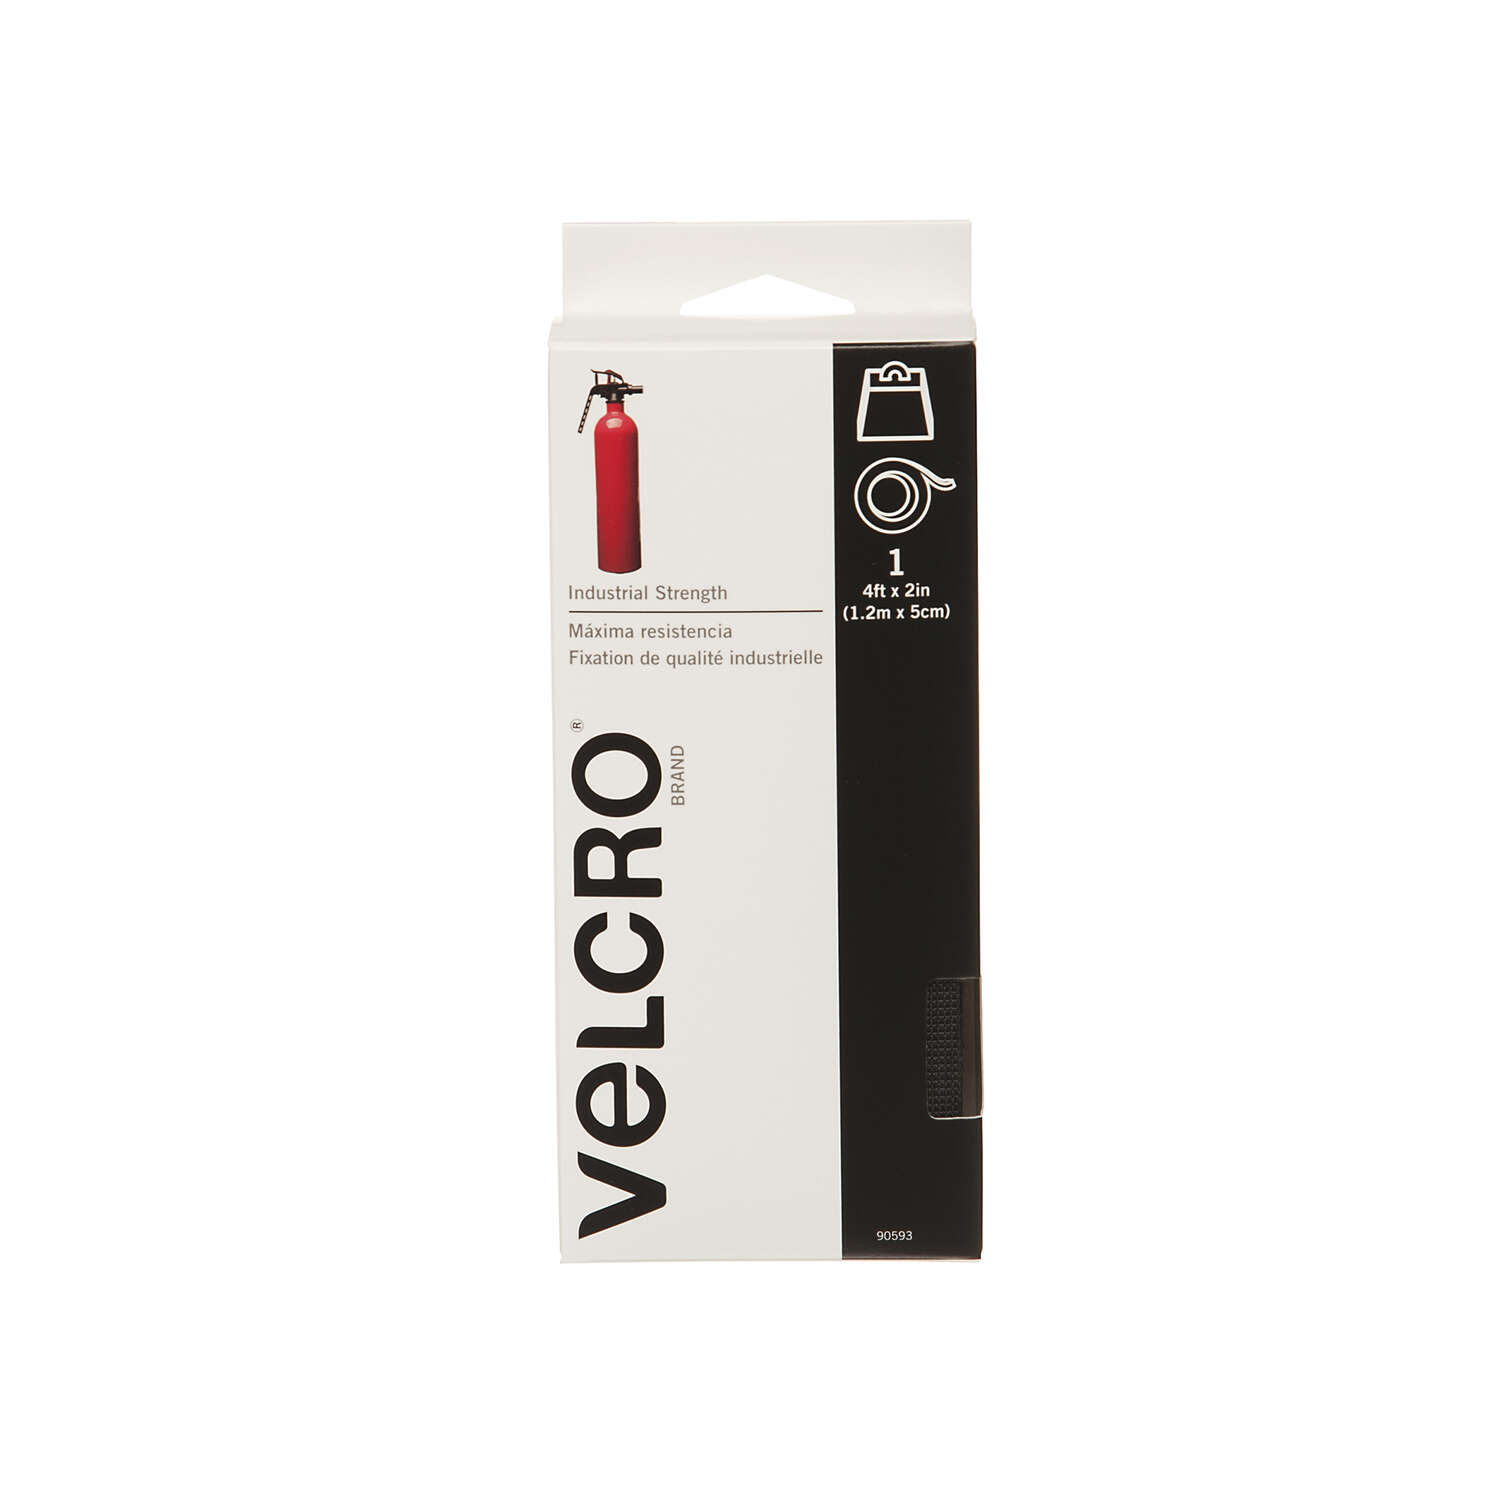 Velcro Brand Hook and Loop Fastener Industrial Stregnth 48" by 2" 1 pk 90593 